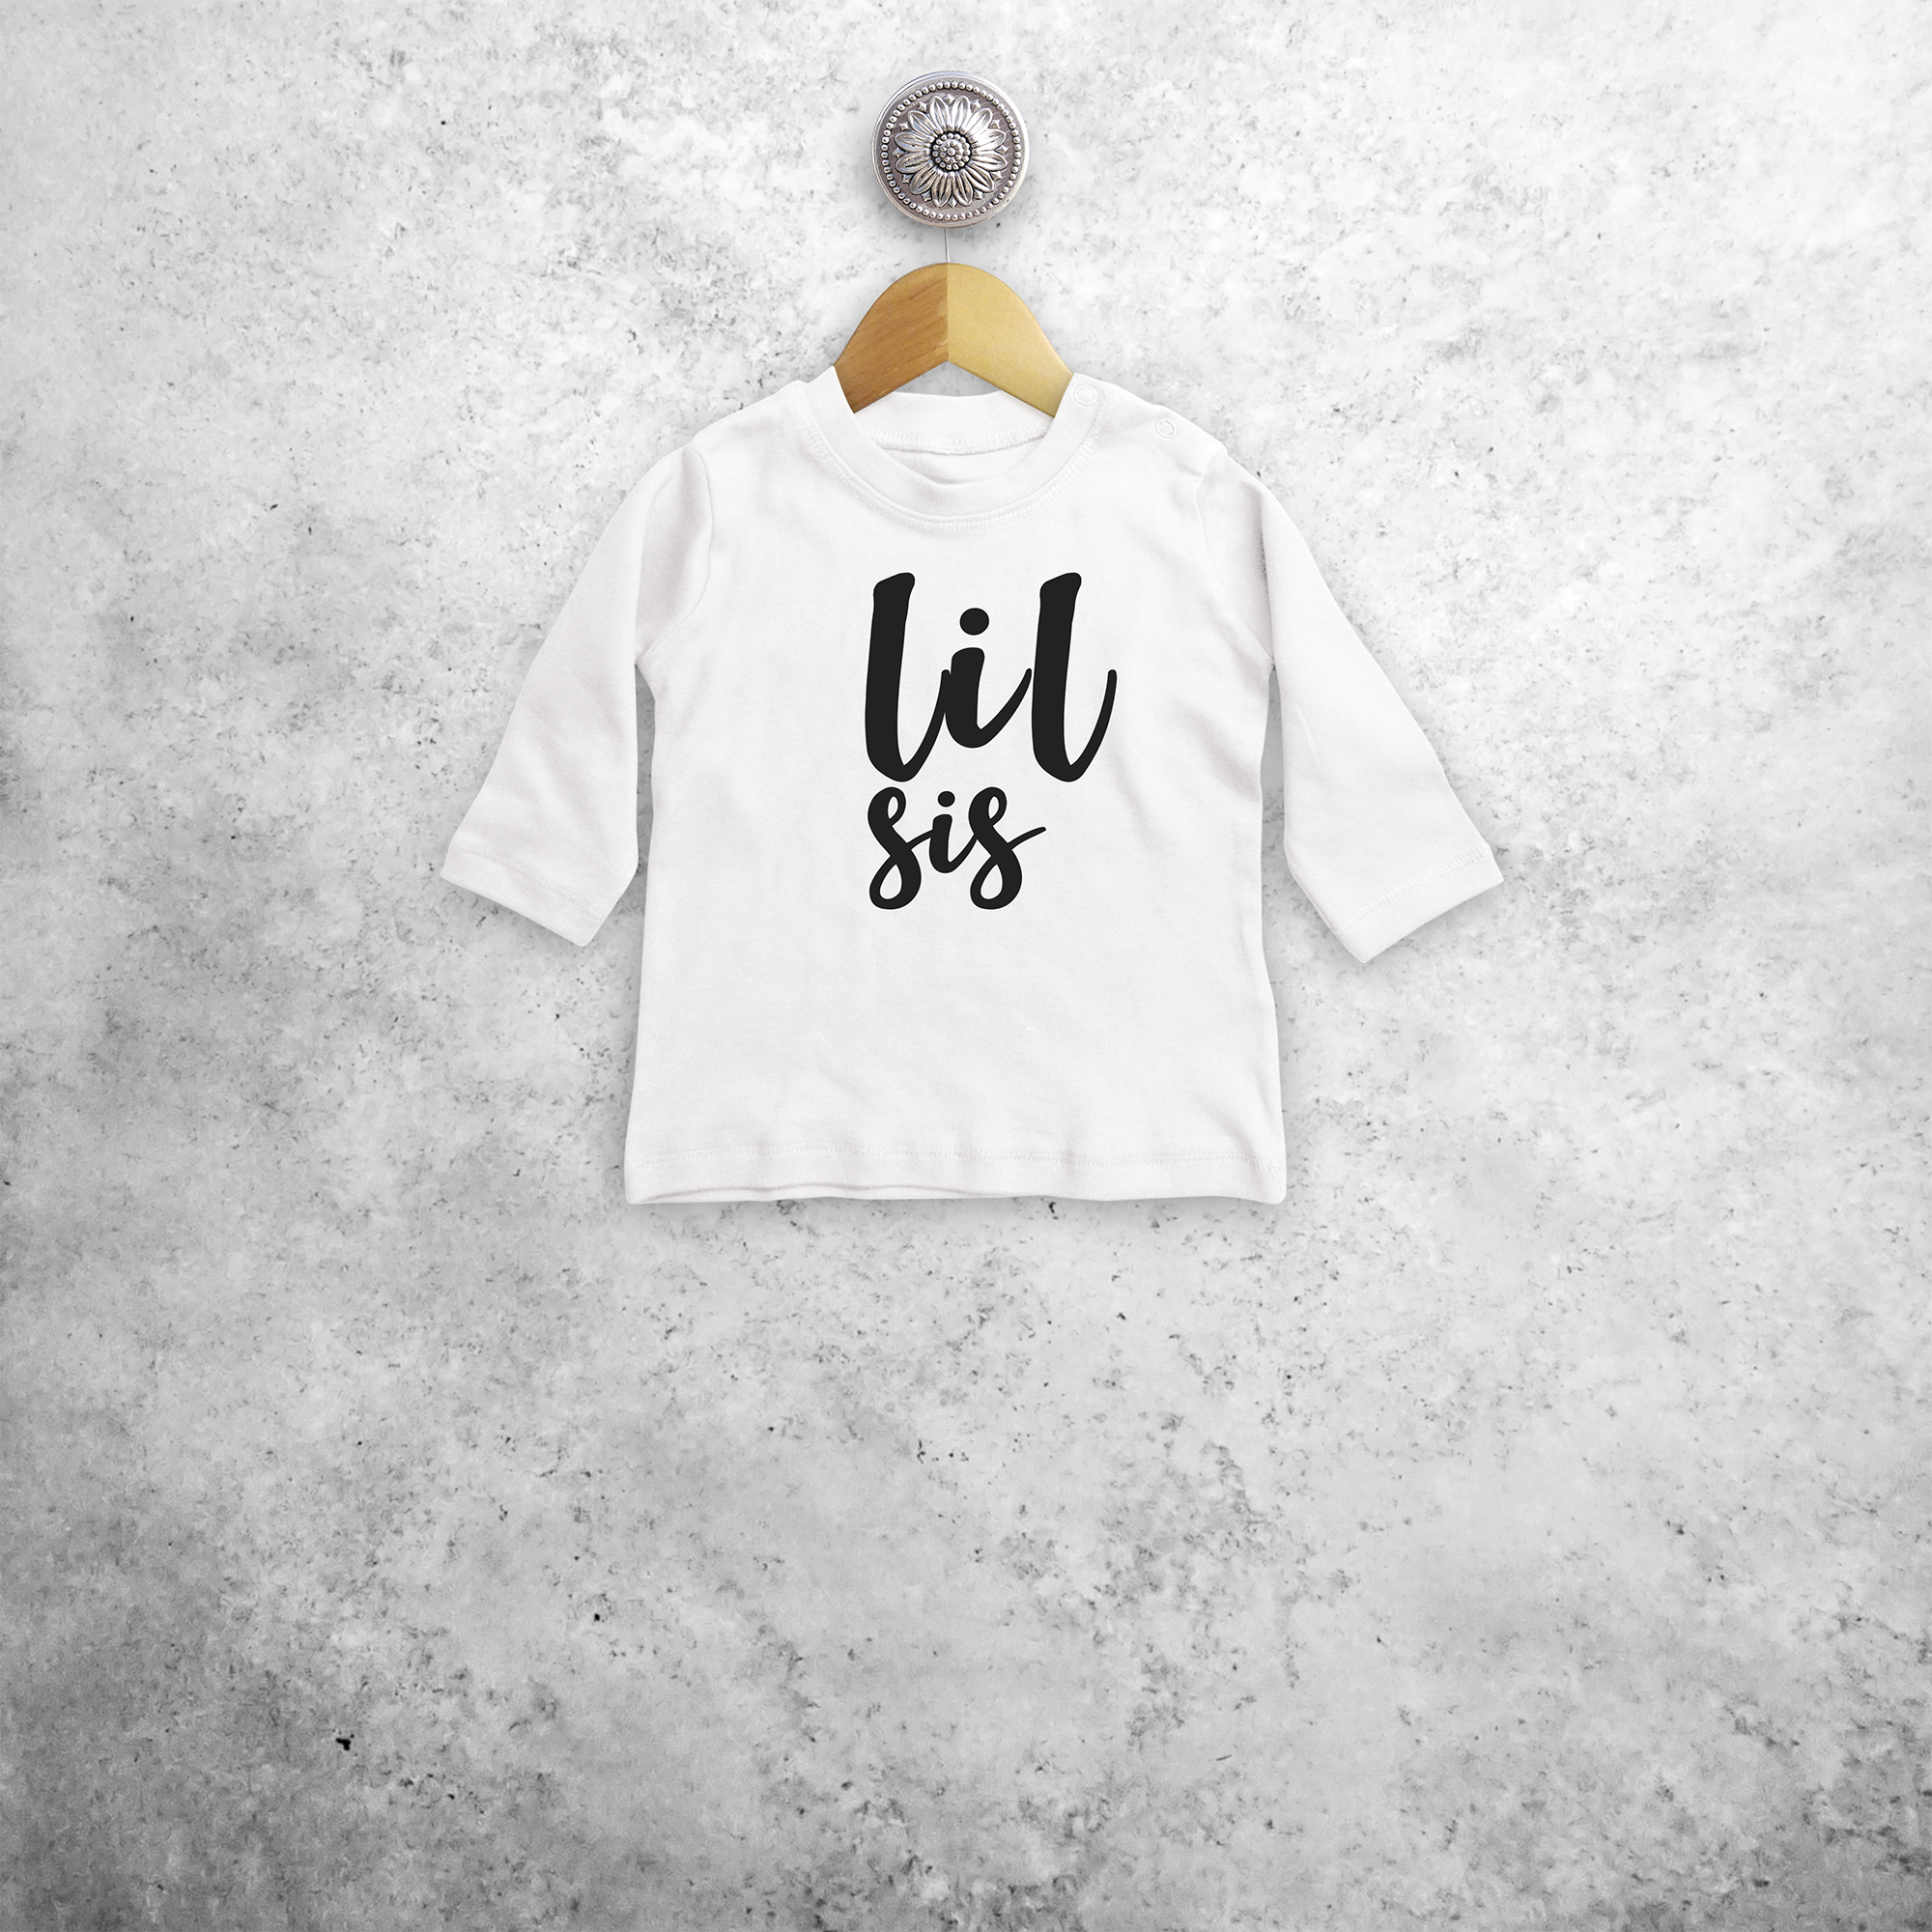 'Lil sis' baby longsleeve shirt